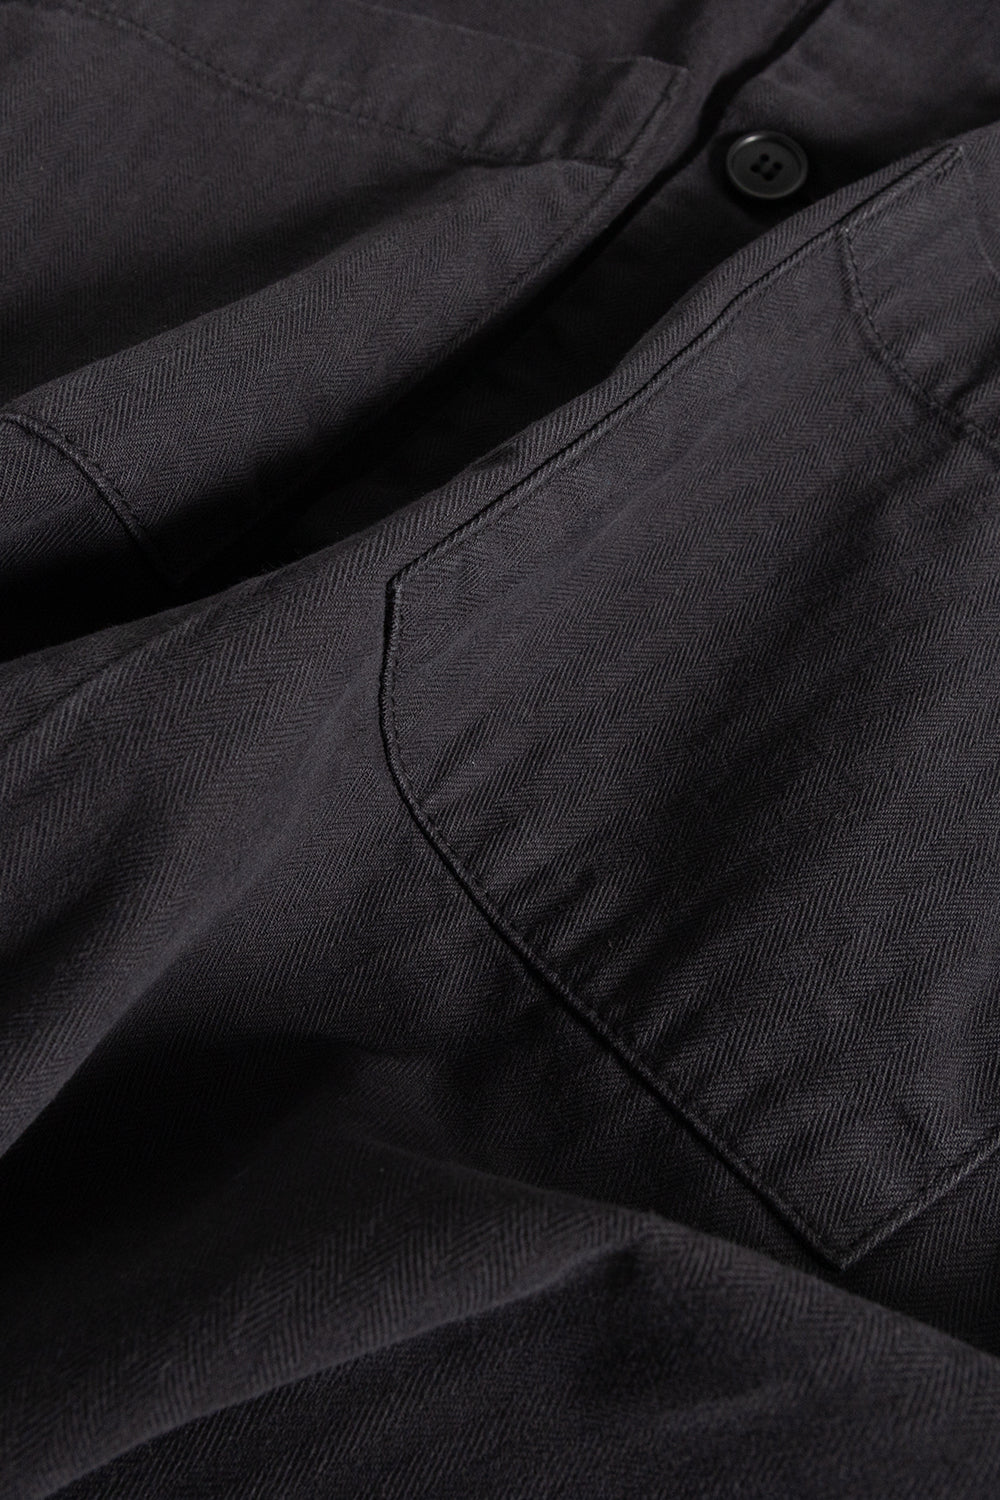 Knickerbocker chore shirt black fabric